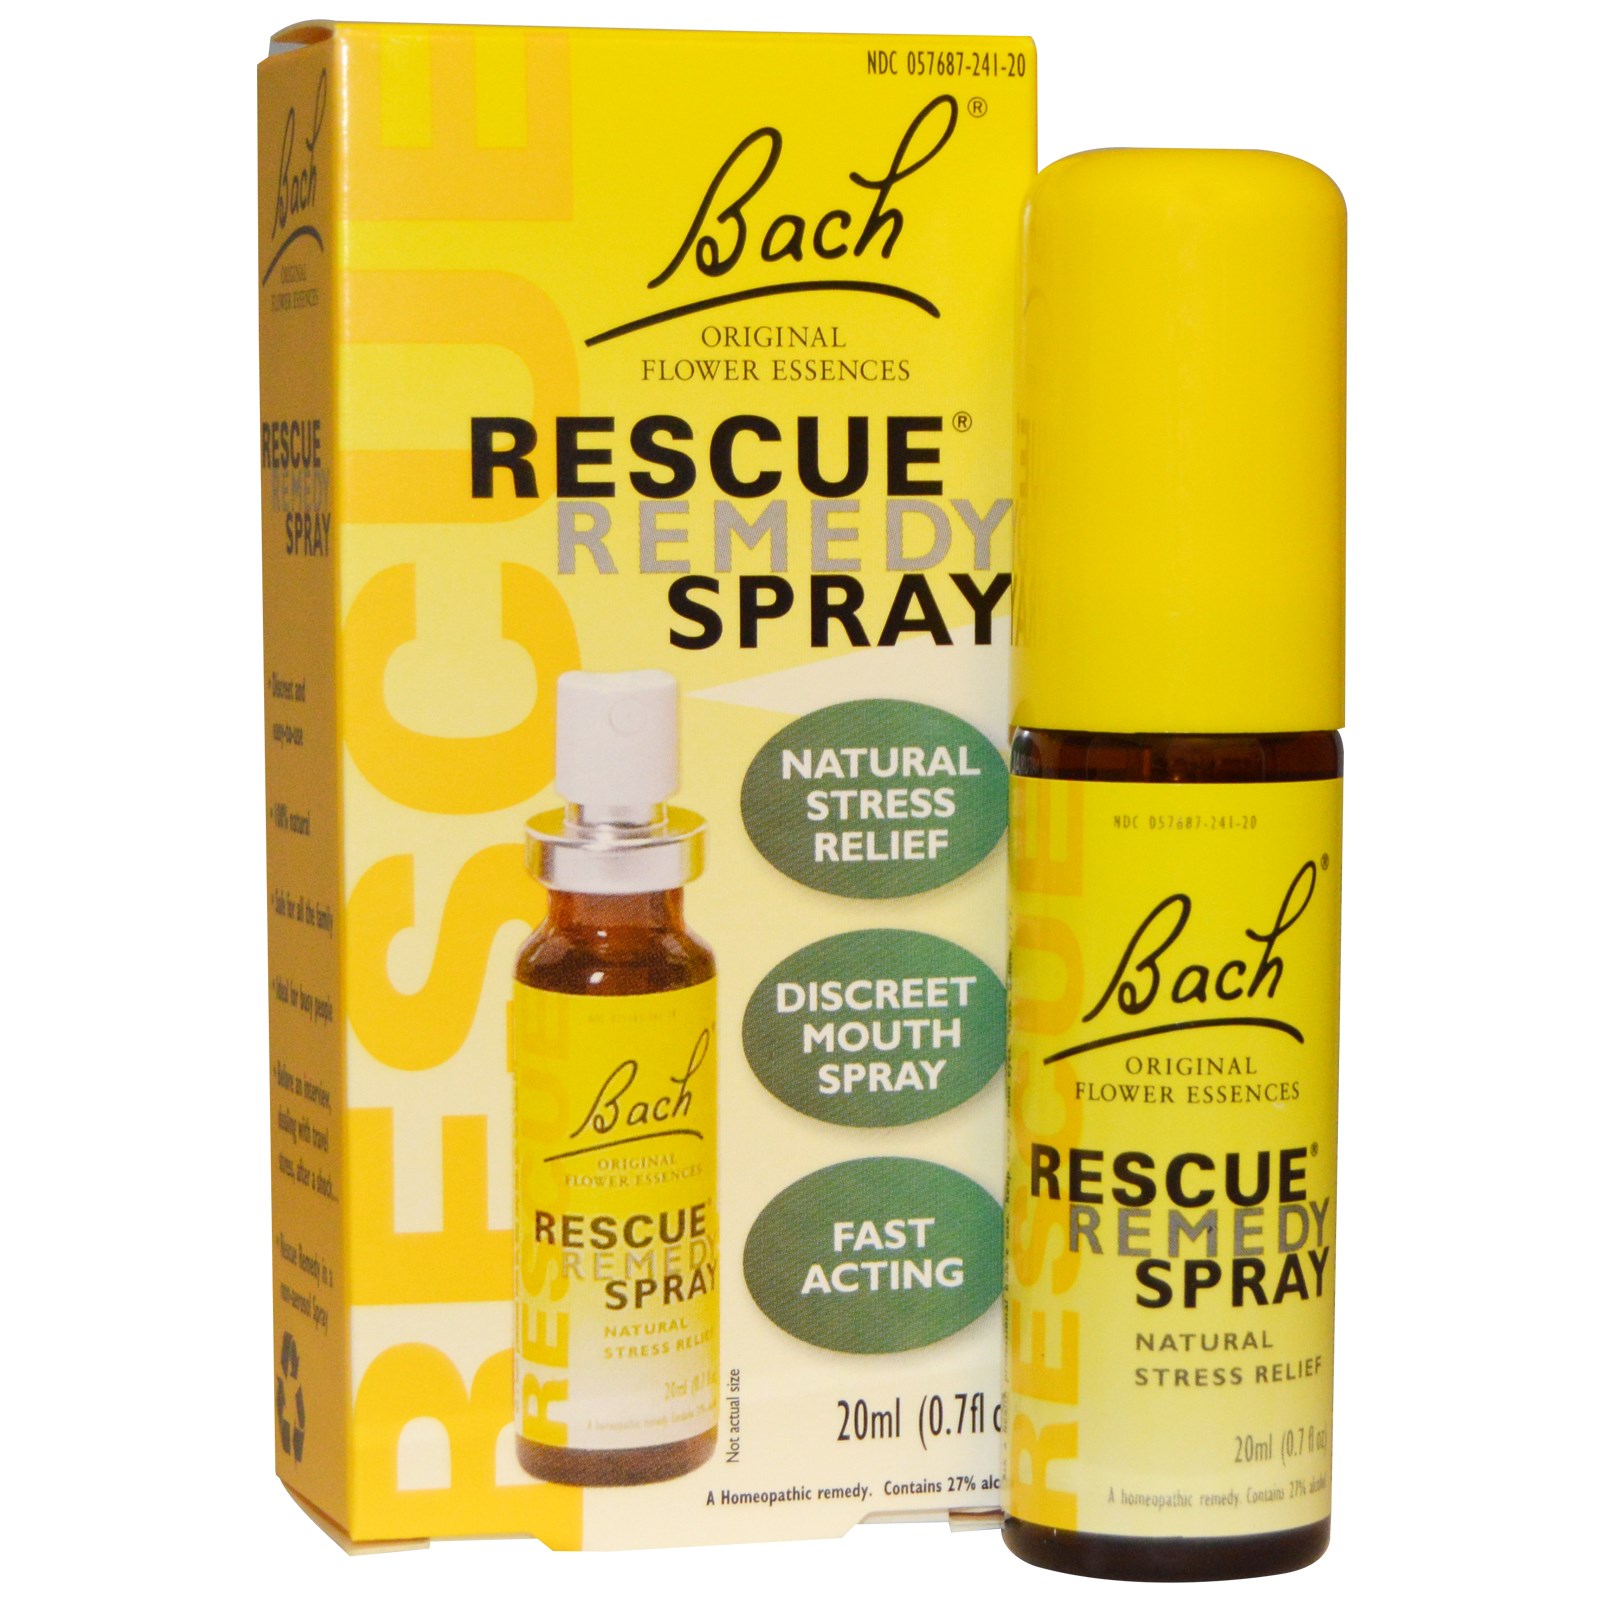 Rescue Remedy Spray 20ml € 14,40 prezzo Parafarmacia Cravero